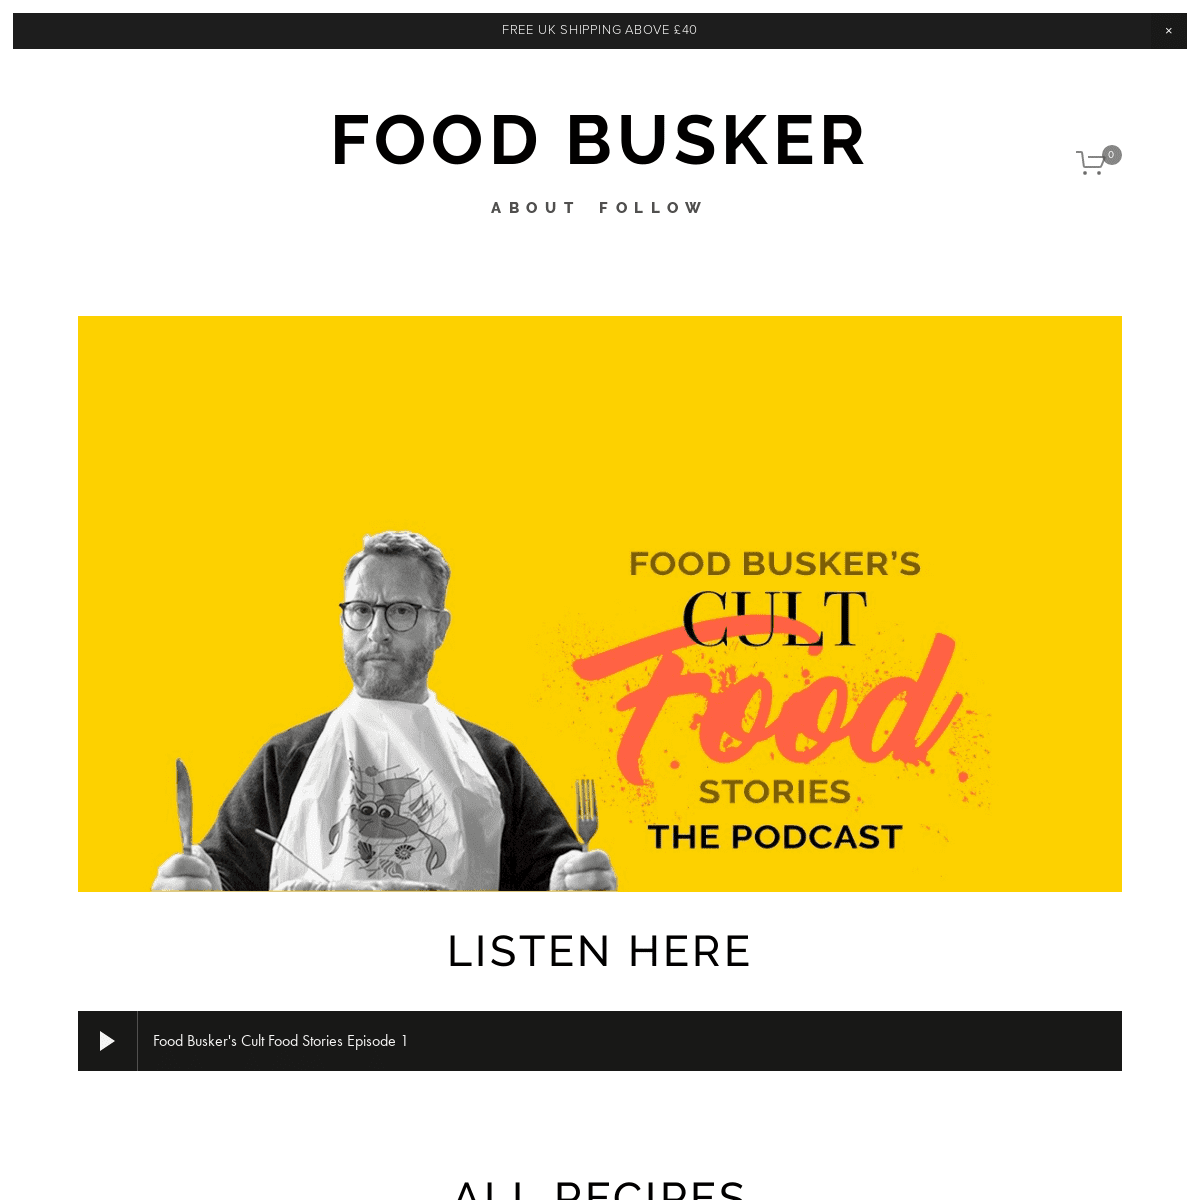 Food Busker